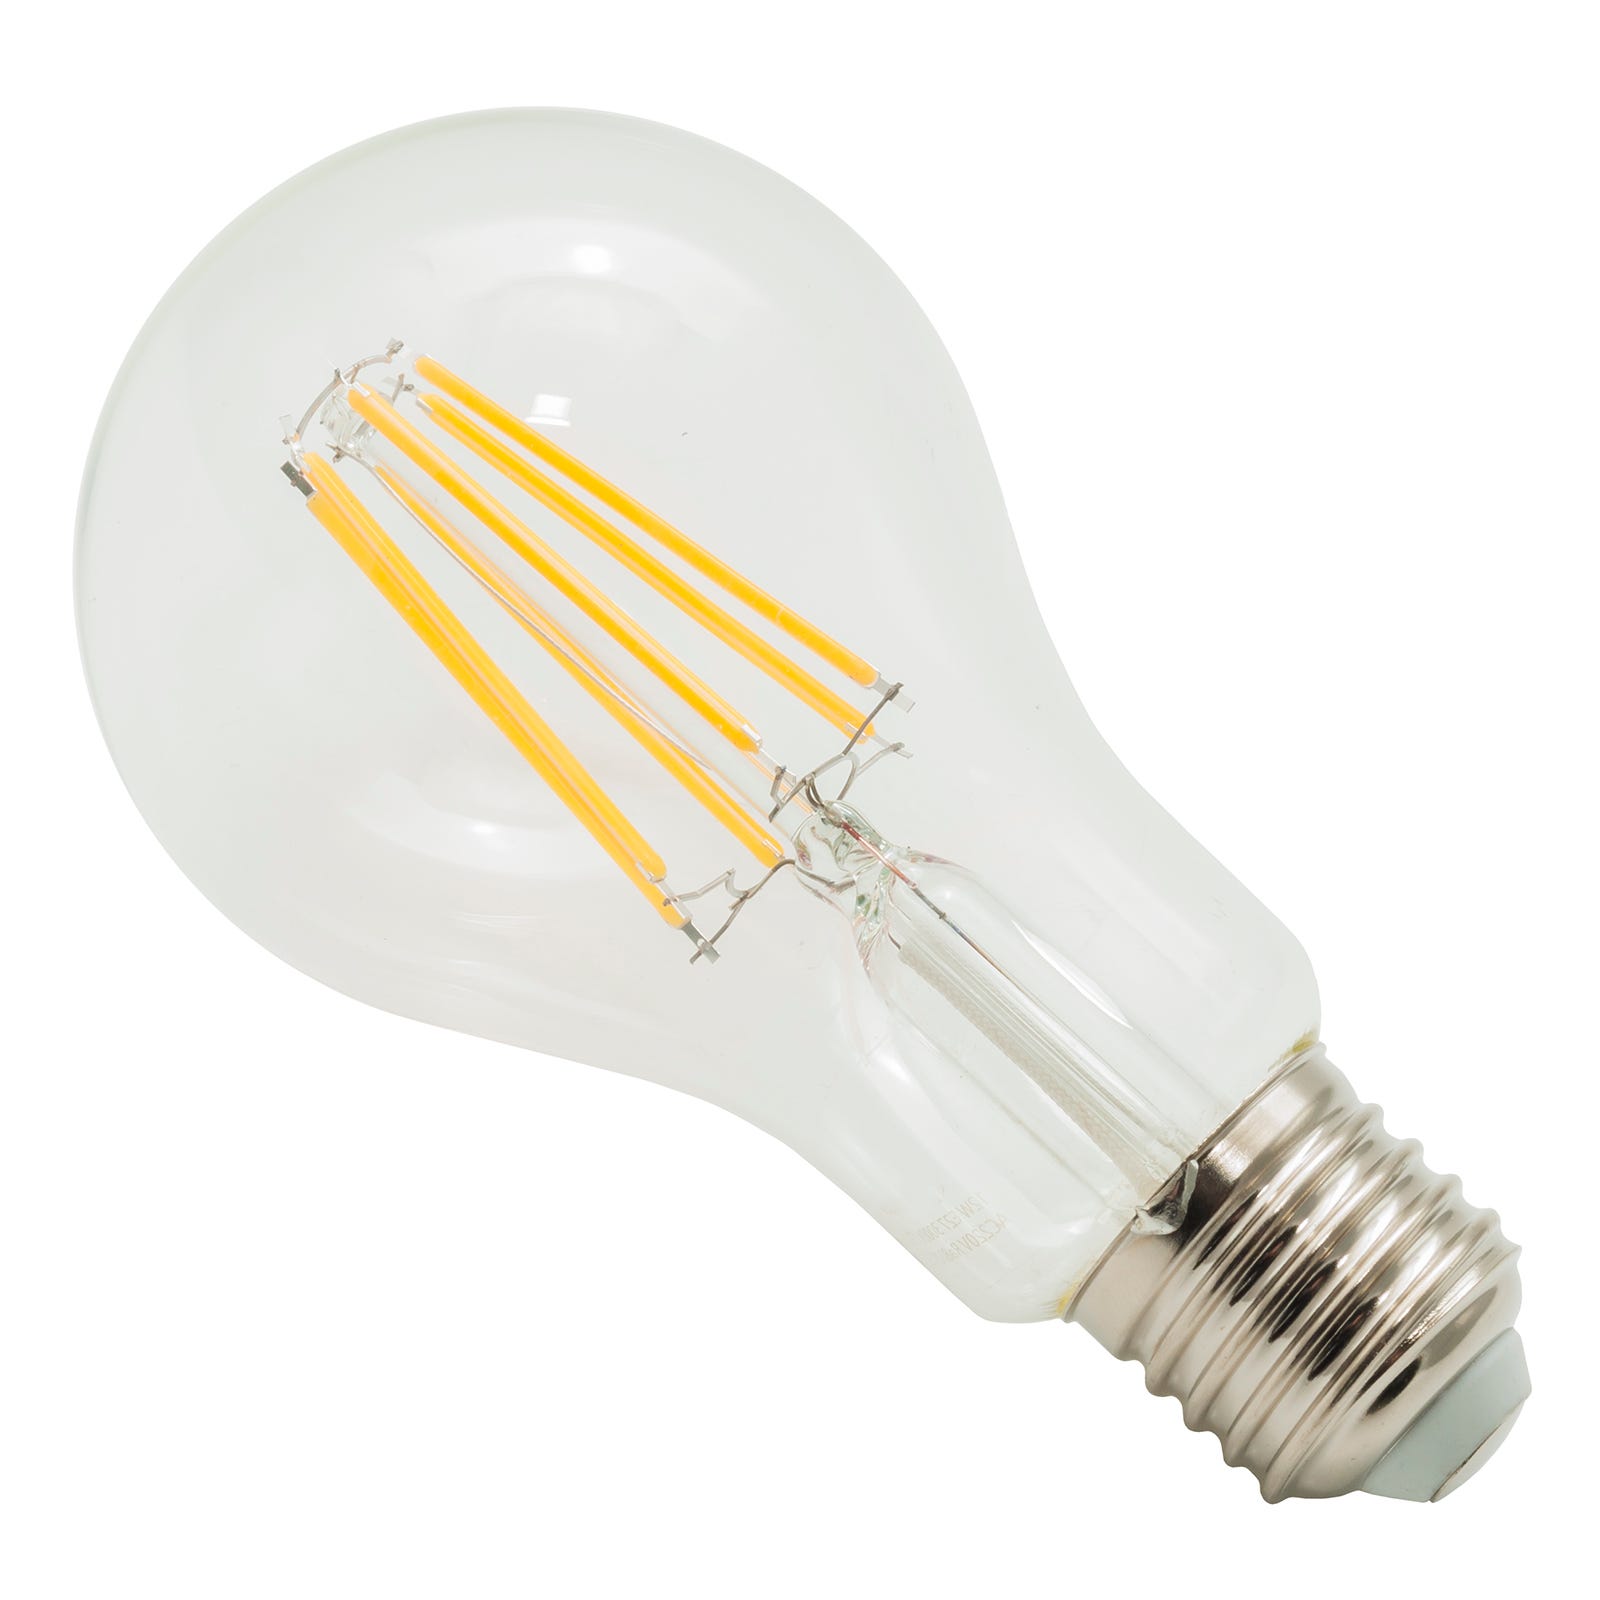 Lampadina led filamento vintage 6w attacco grande E27 trasparente luce  calda fredda bianca a basso consumo